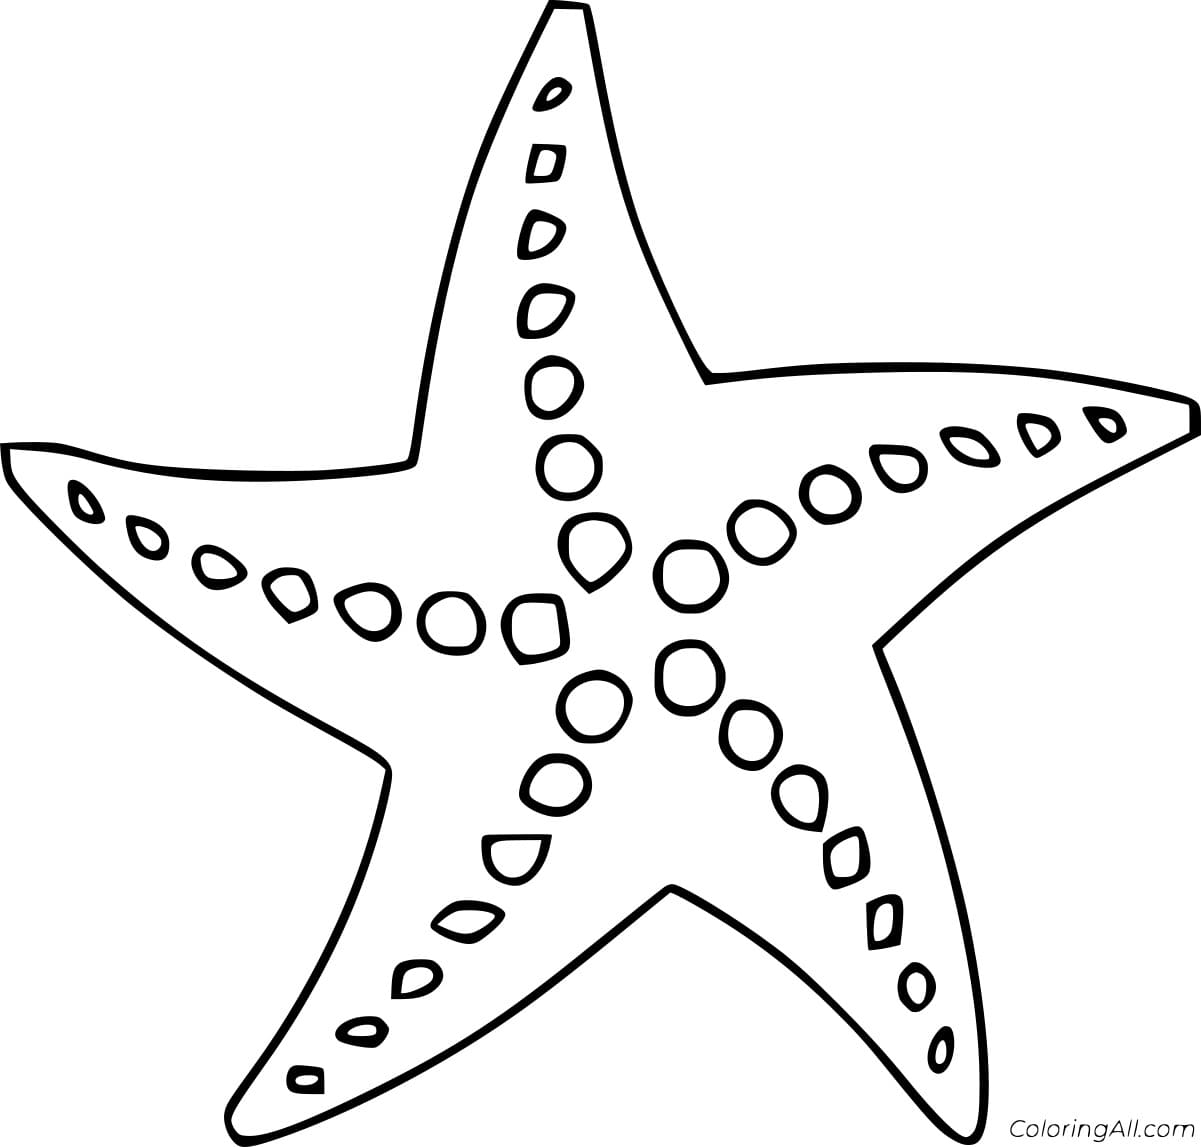 Circle Starfish Image